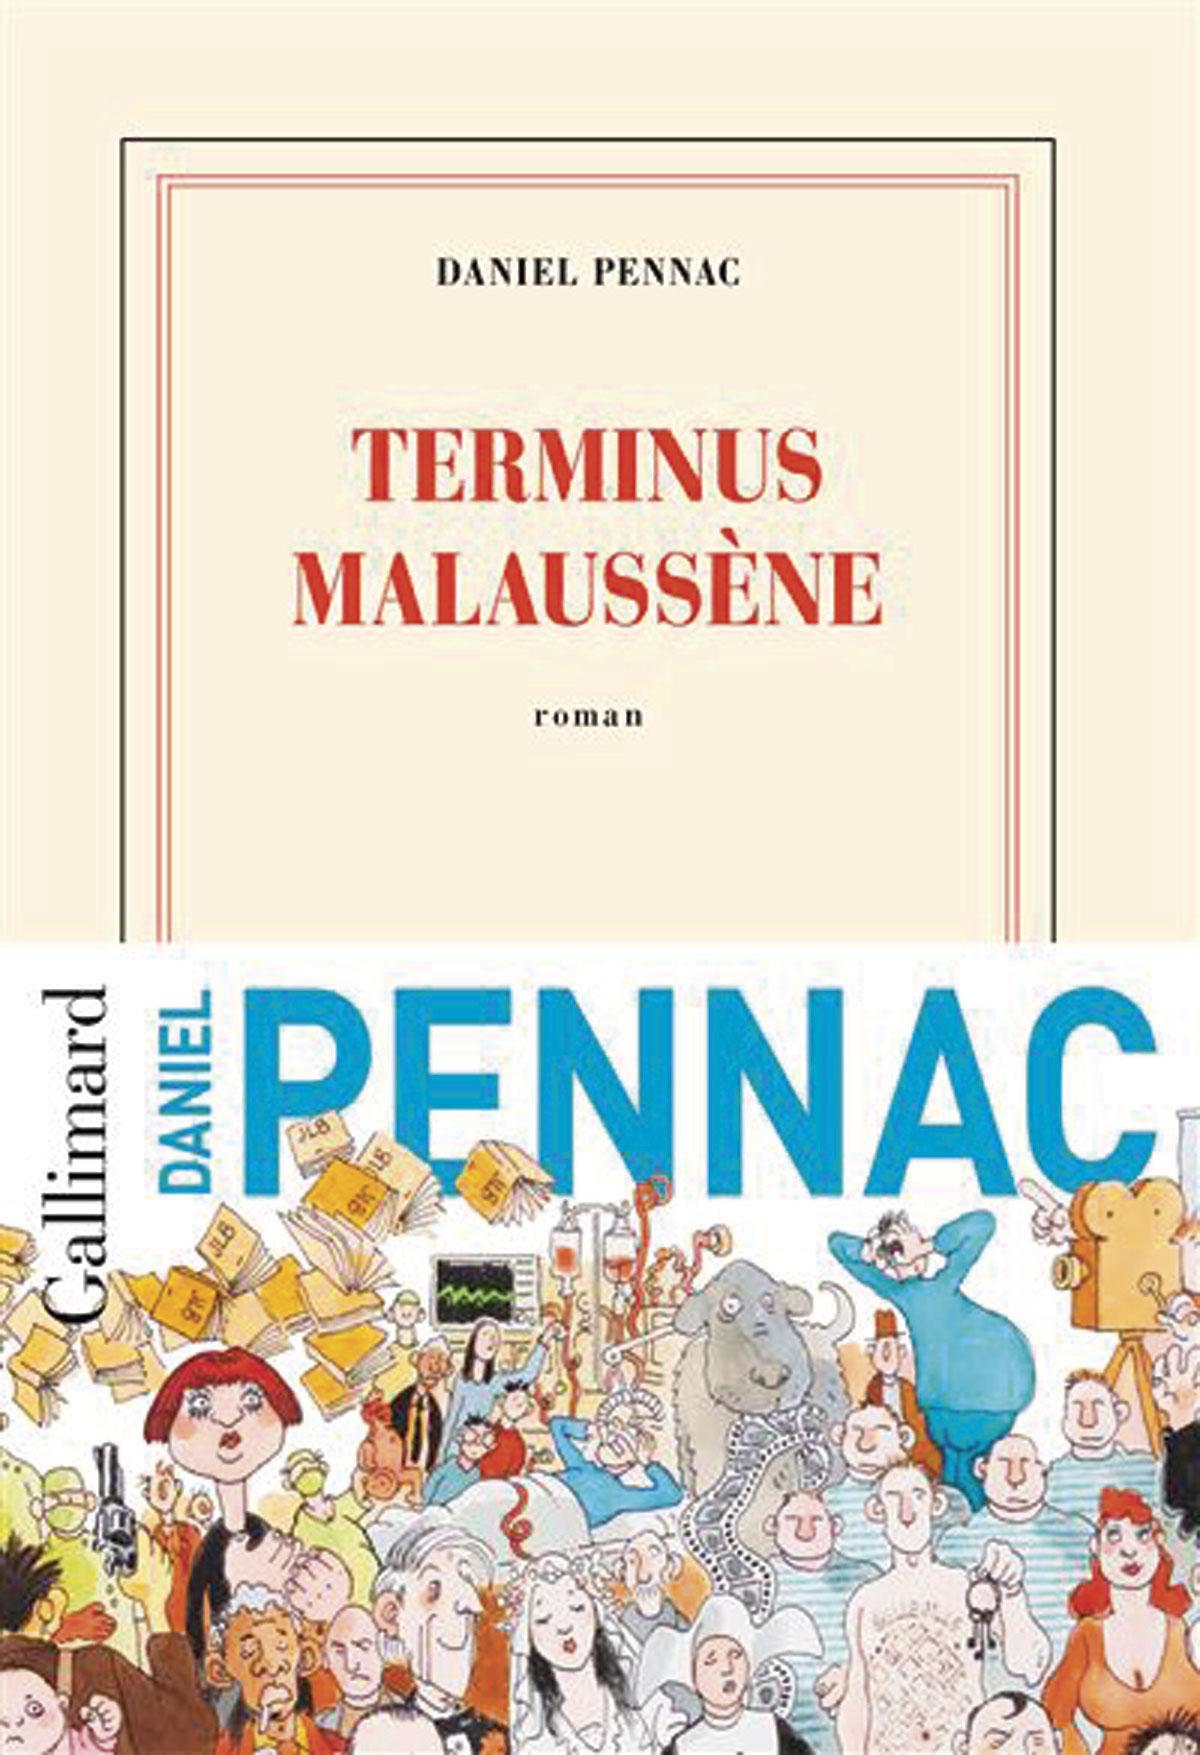 (1) Terminus Malaussène, par Daniel Pennac, Gallimard, 440 p.